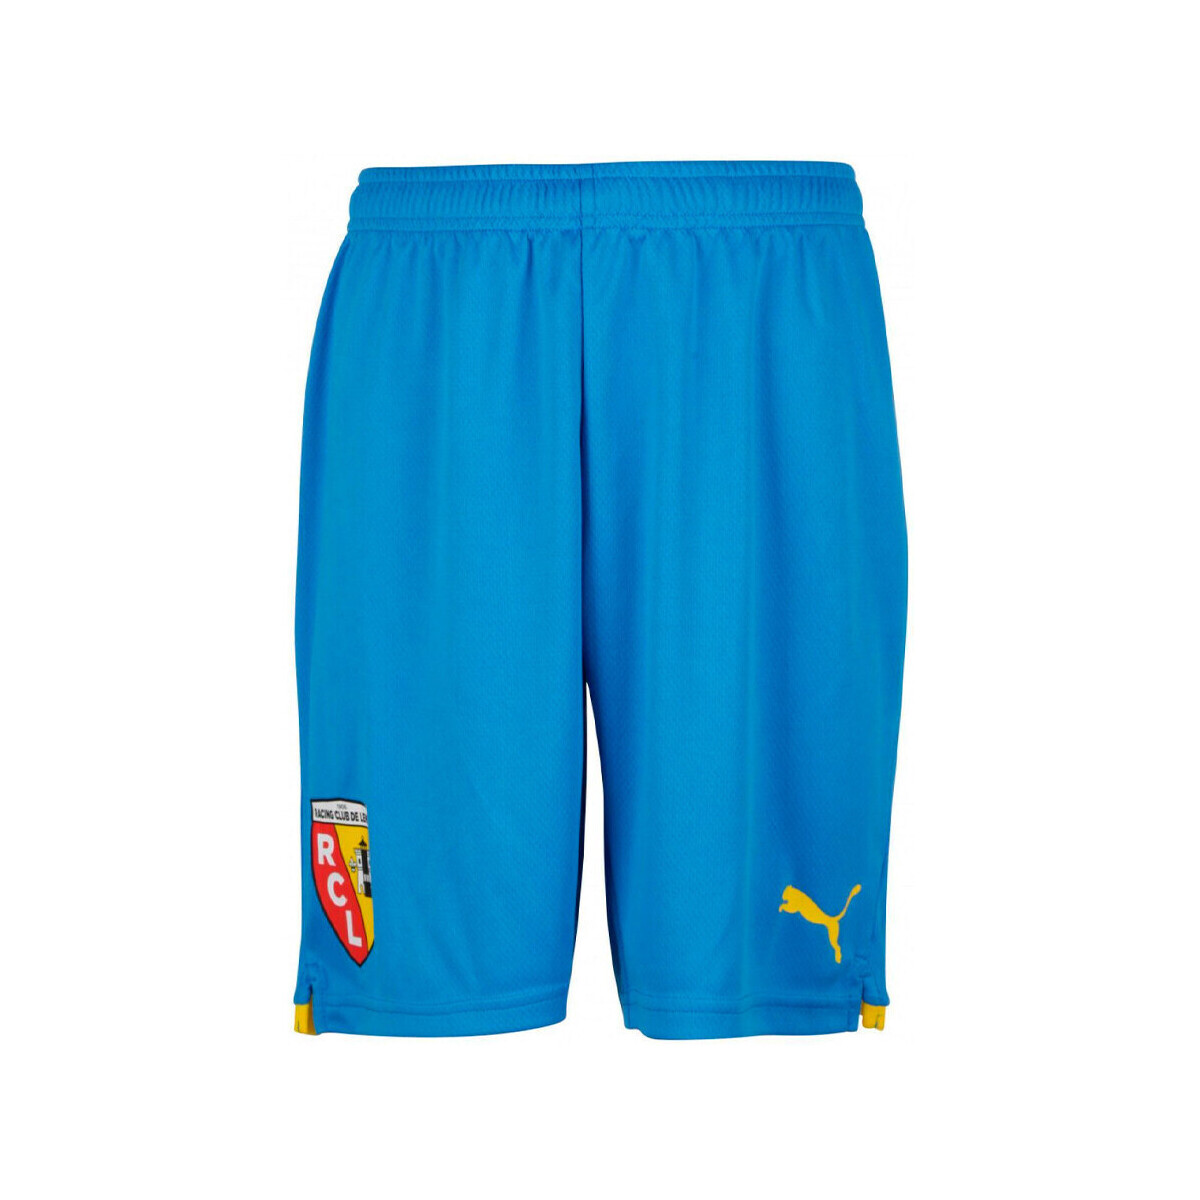 Vêtements Homme Shorts / Bermudas Puma 765431-03 Bleu